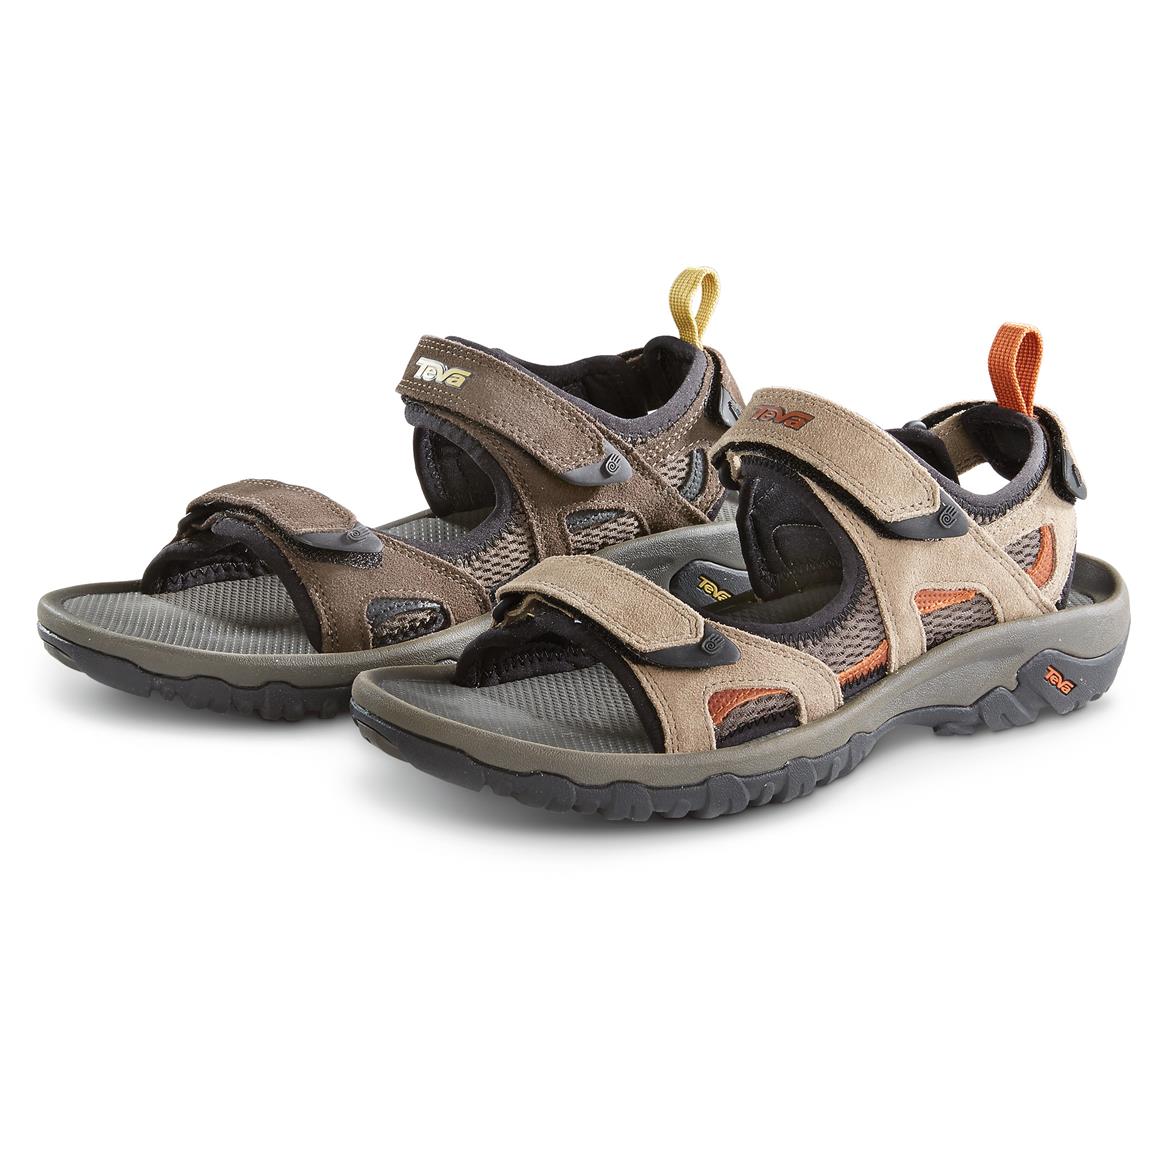 Teva Men's Katari Sandals - 580327, Sandals & Flip Flops at Sportsman's ...